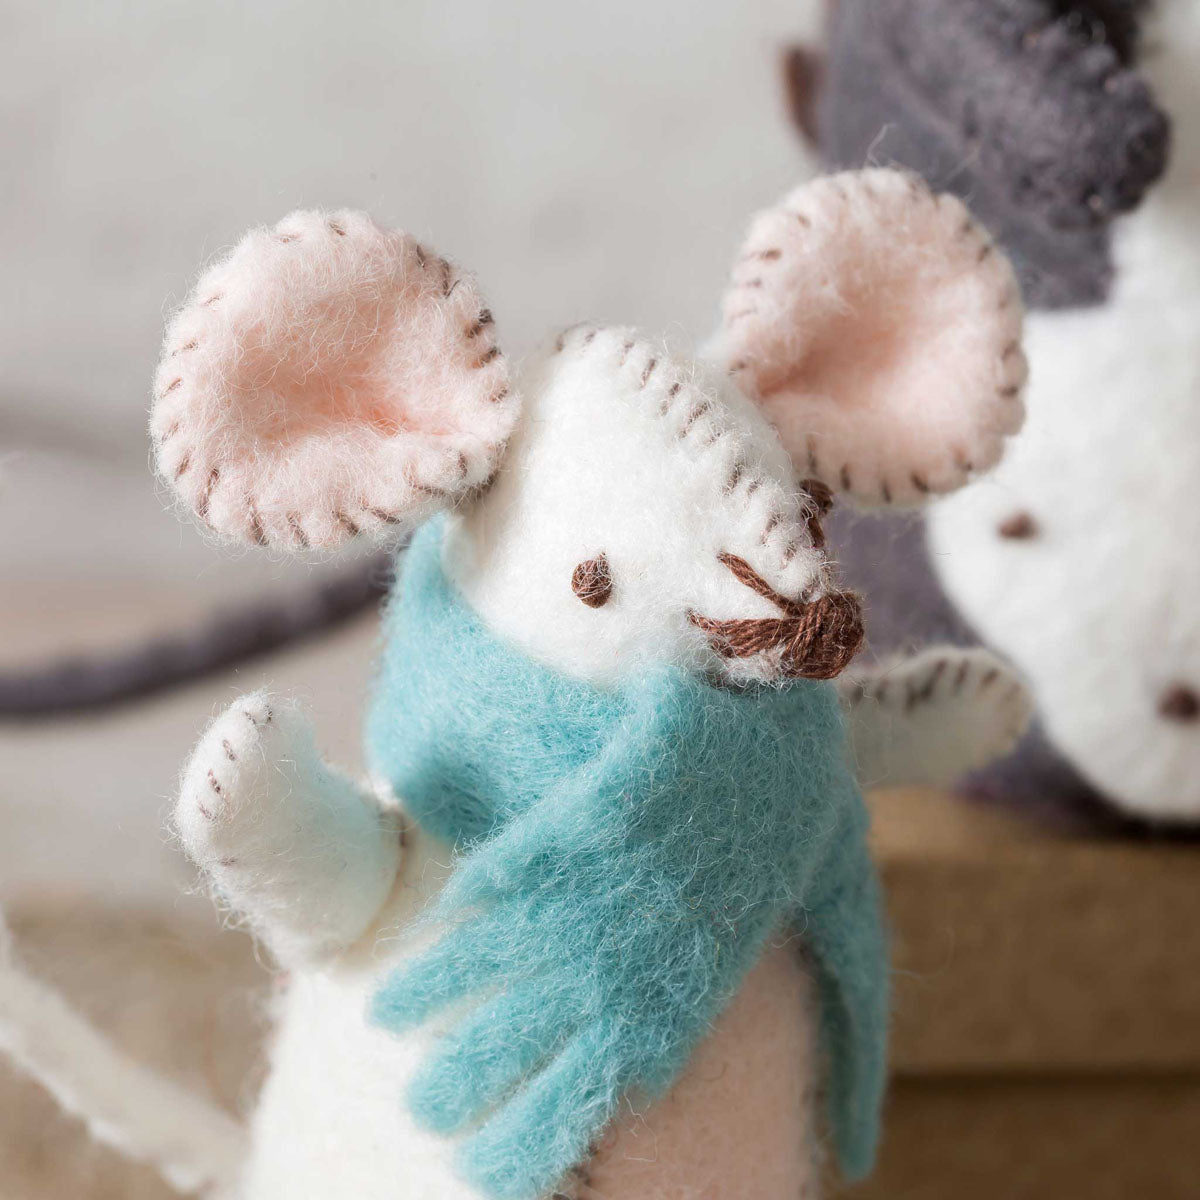 Hand Stitched Felt Softie Kit - Mouse Family